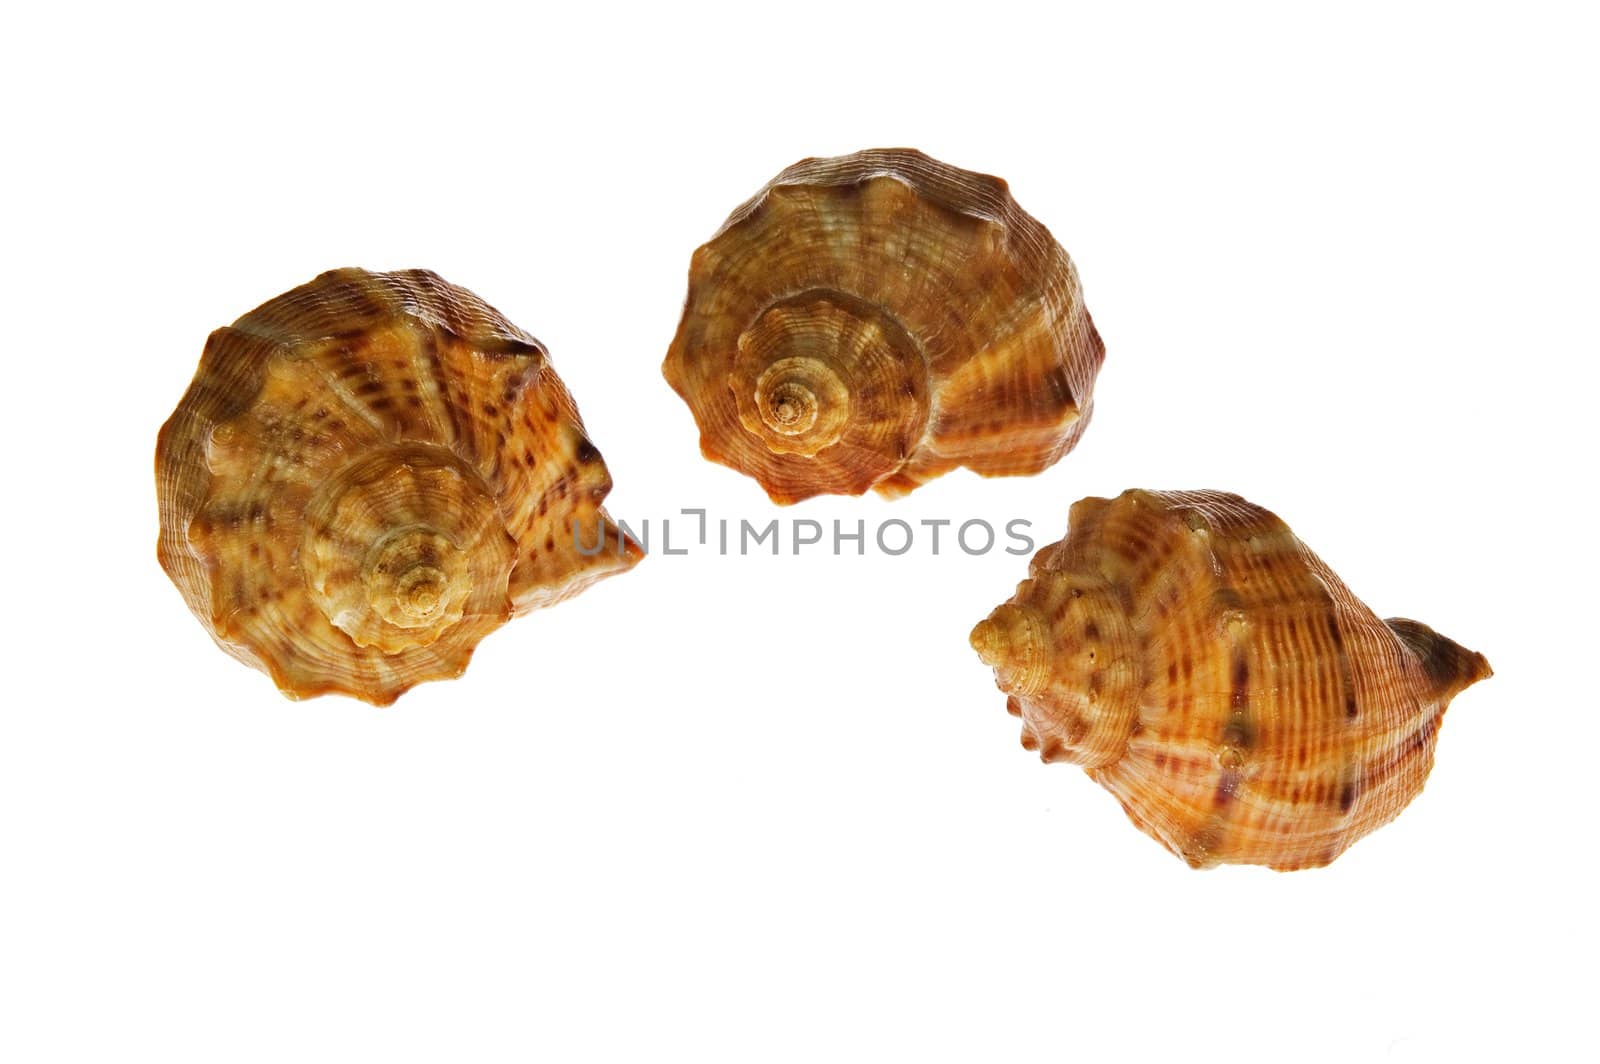 Shells by Michalowski